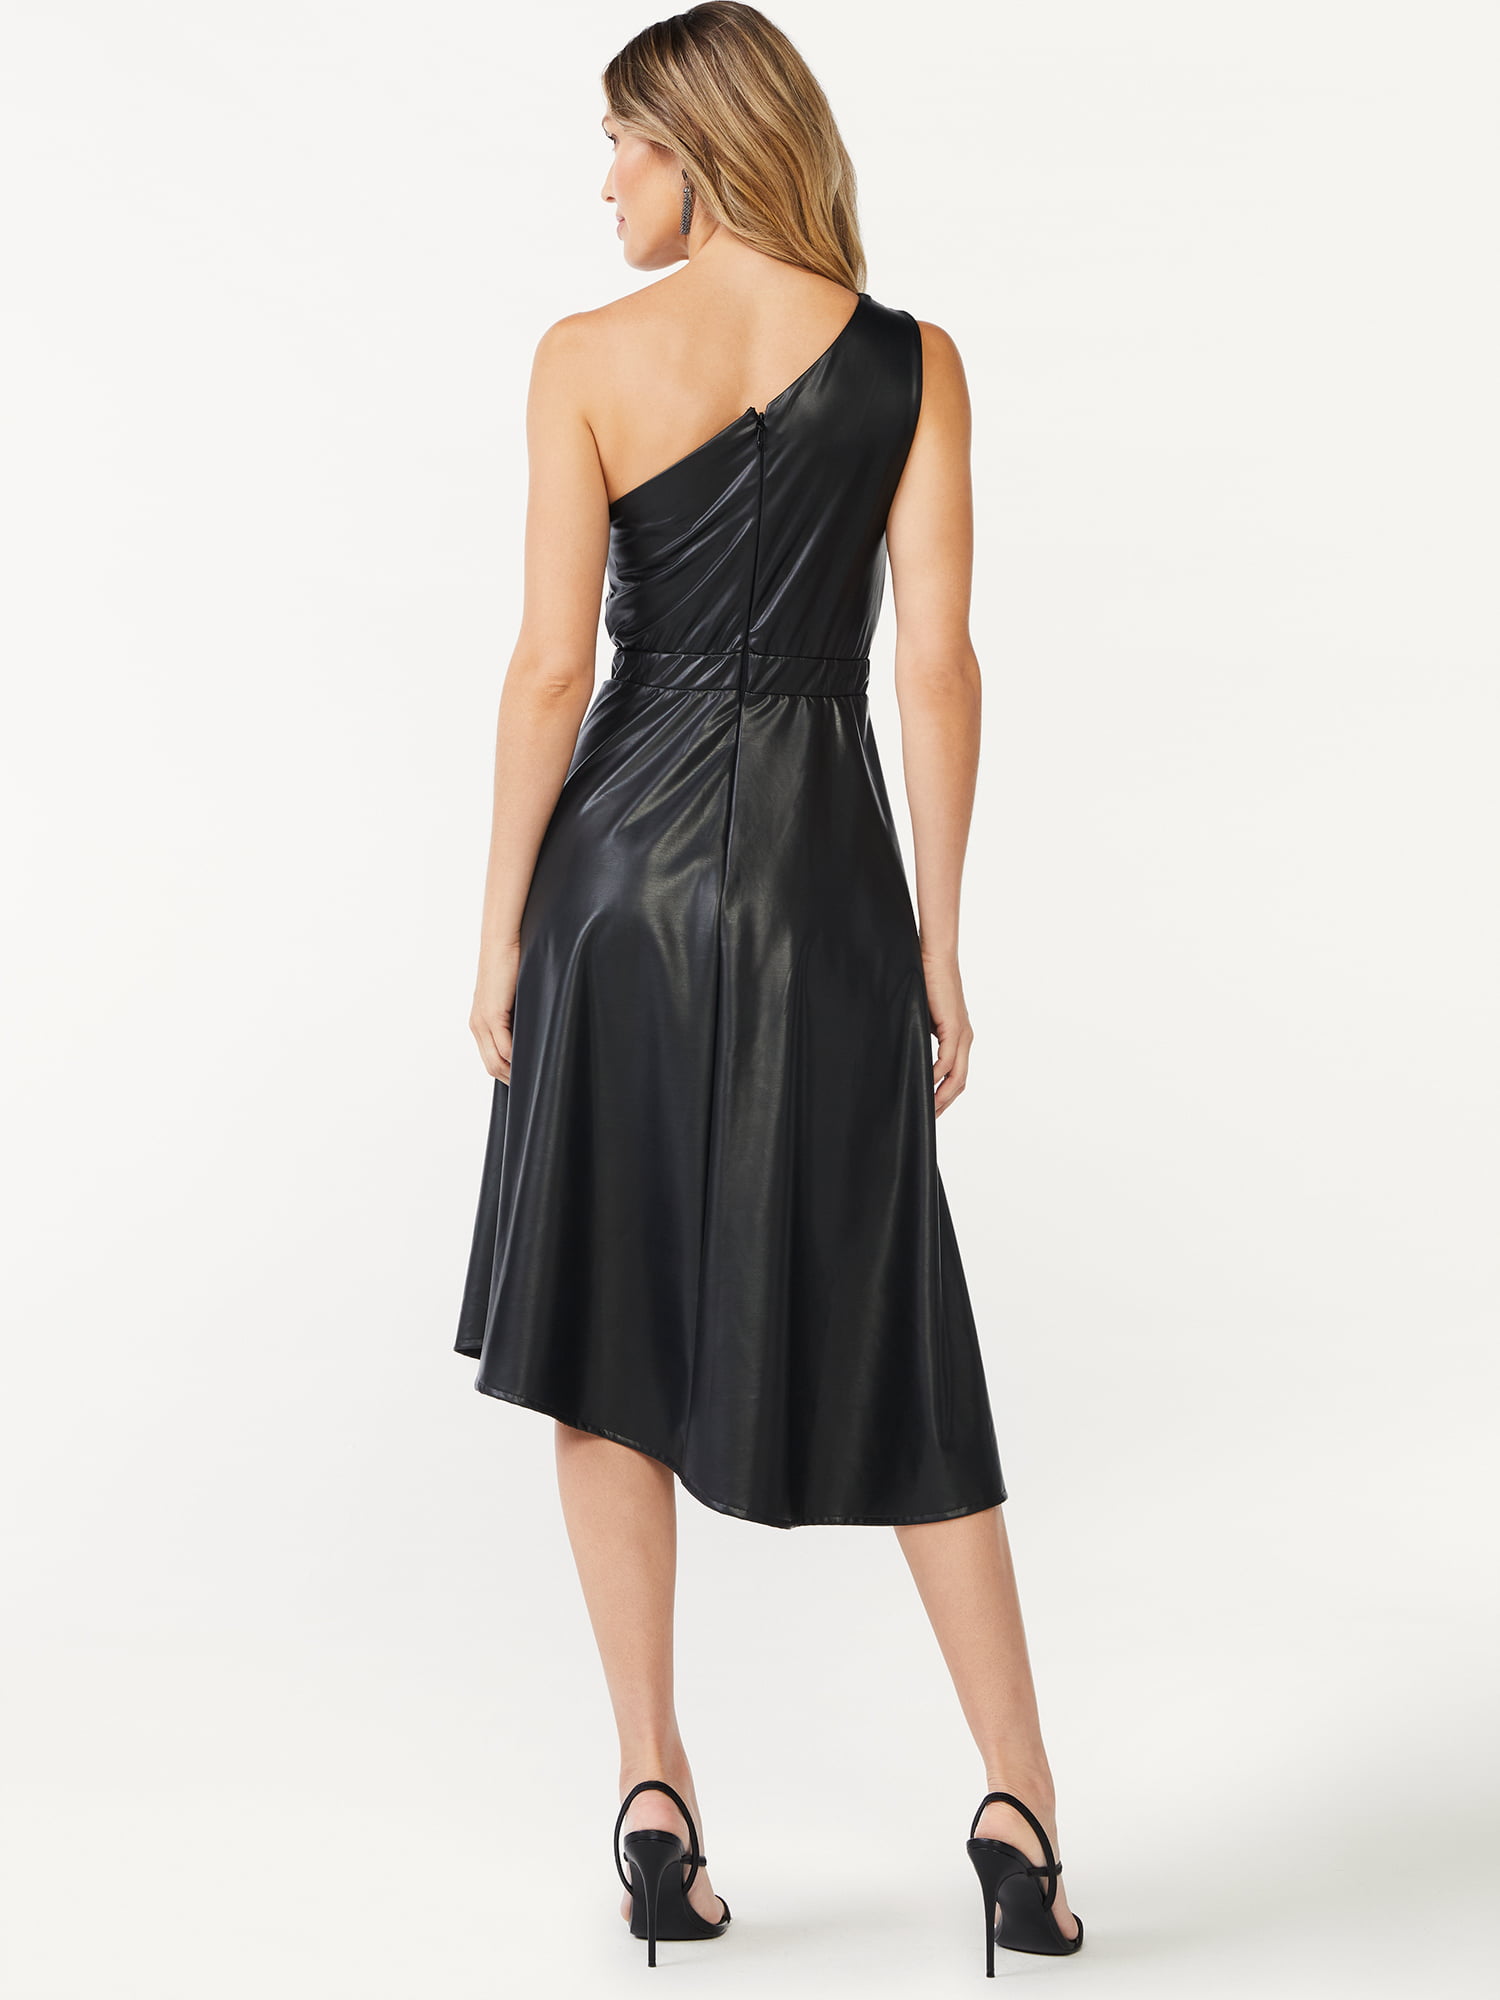 Classy Black One Shoulder Women Faux Leather Dress